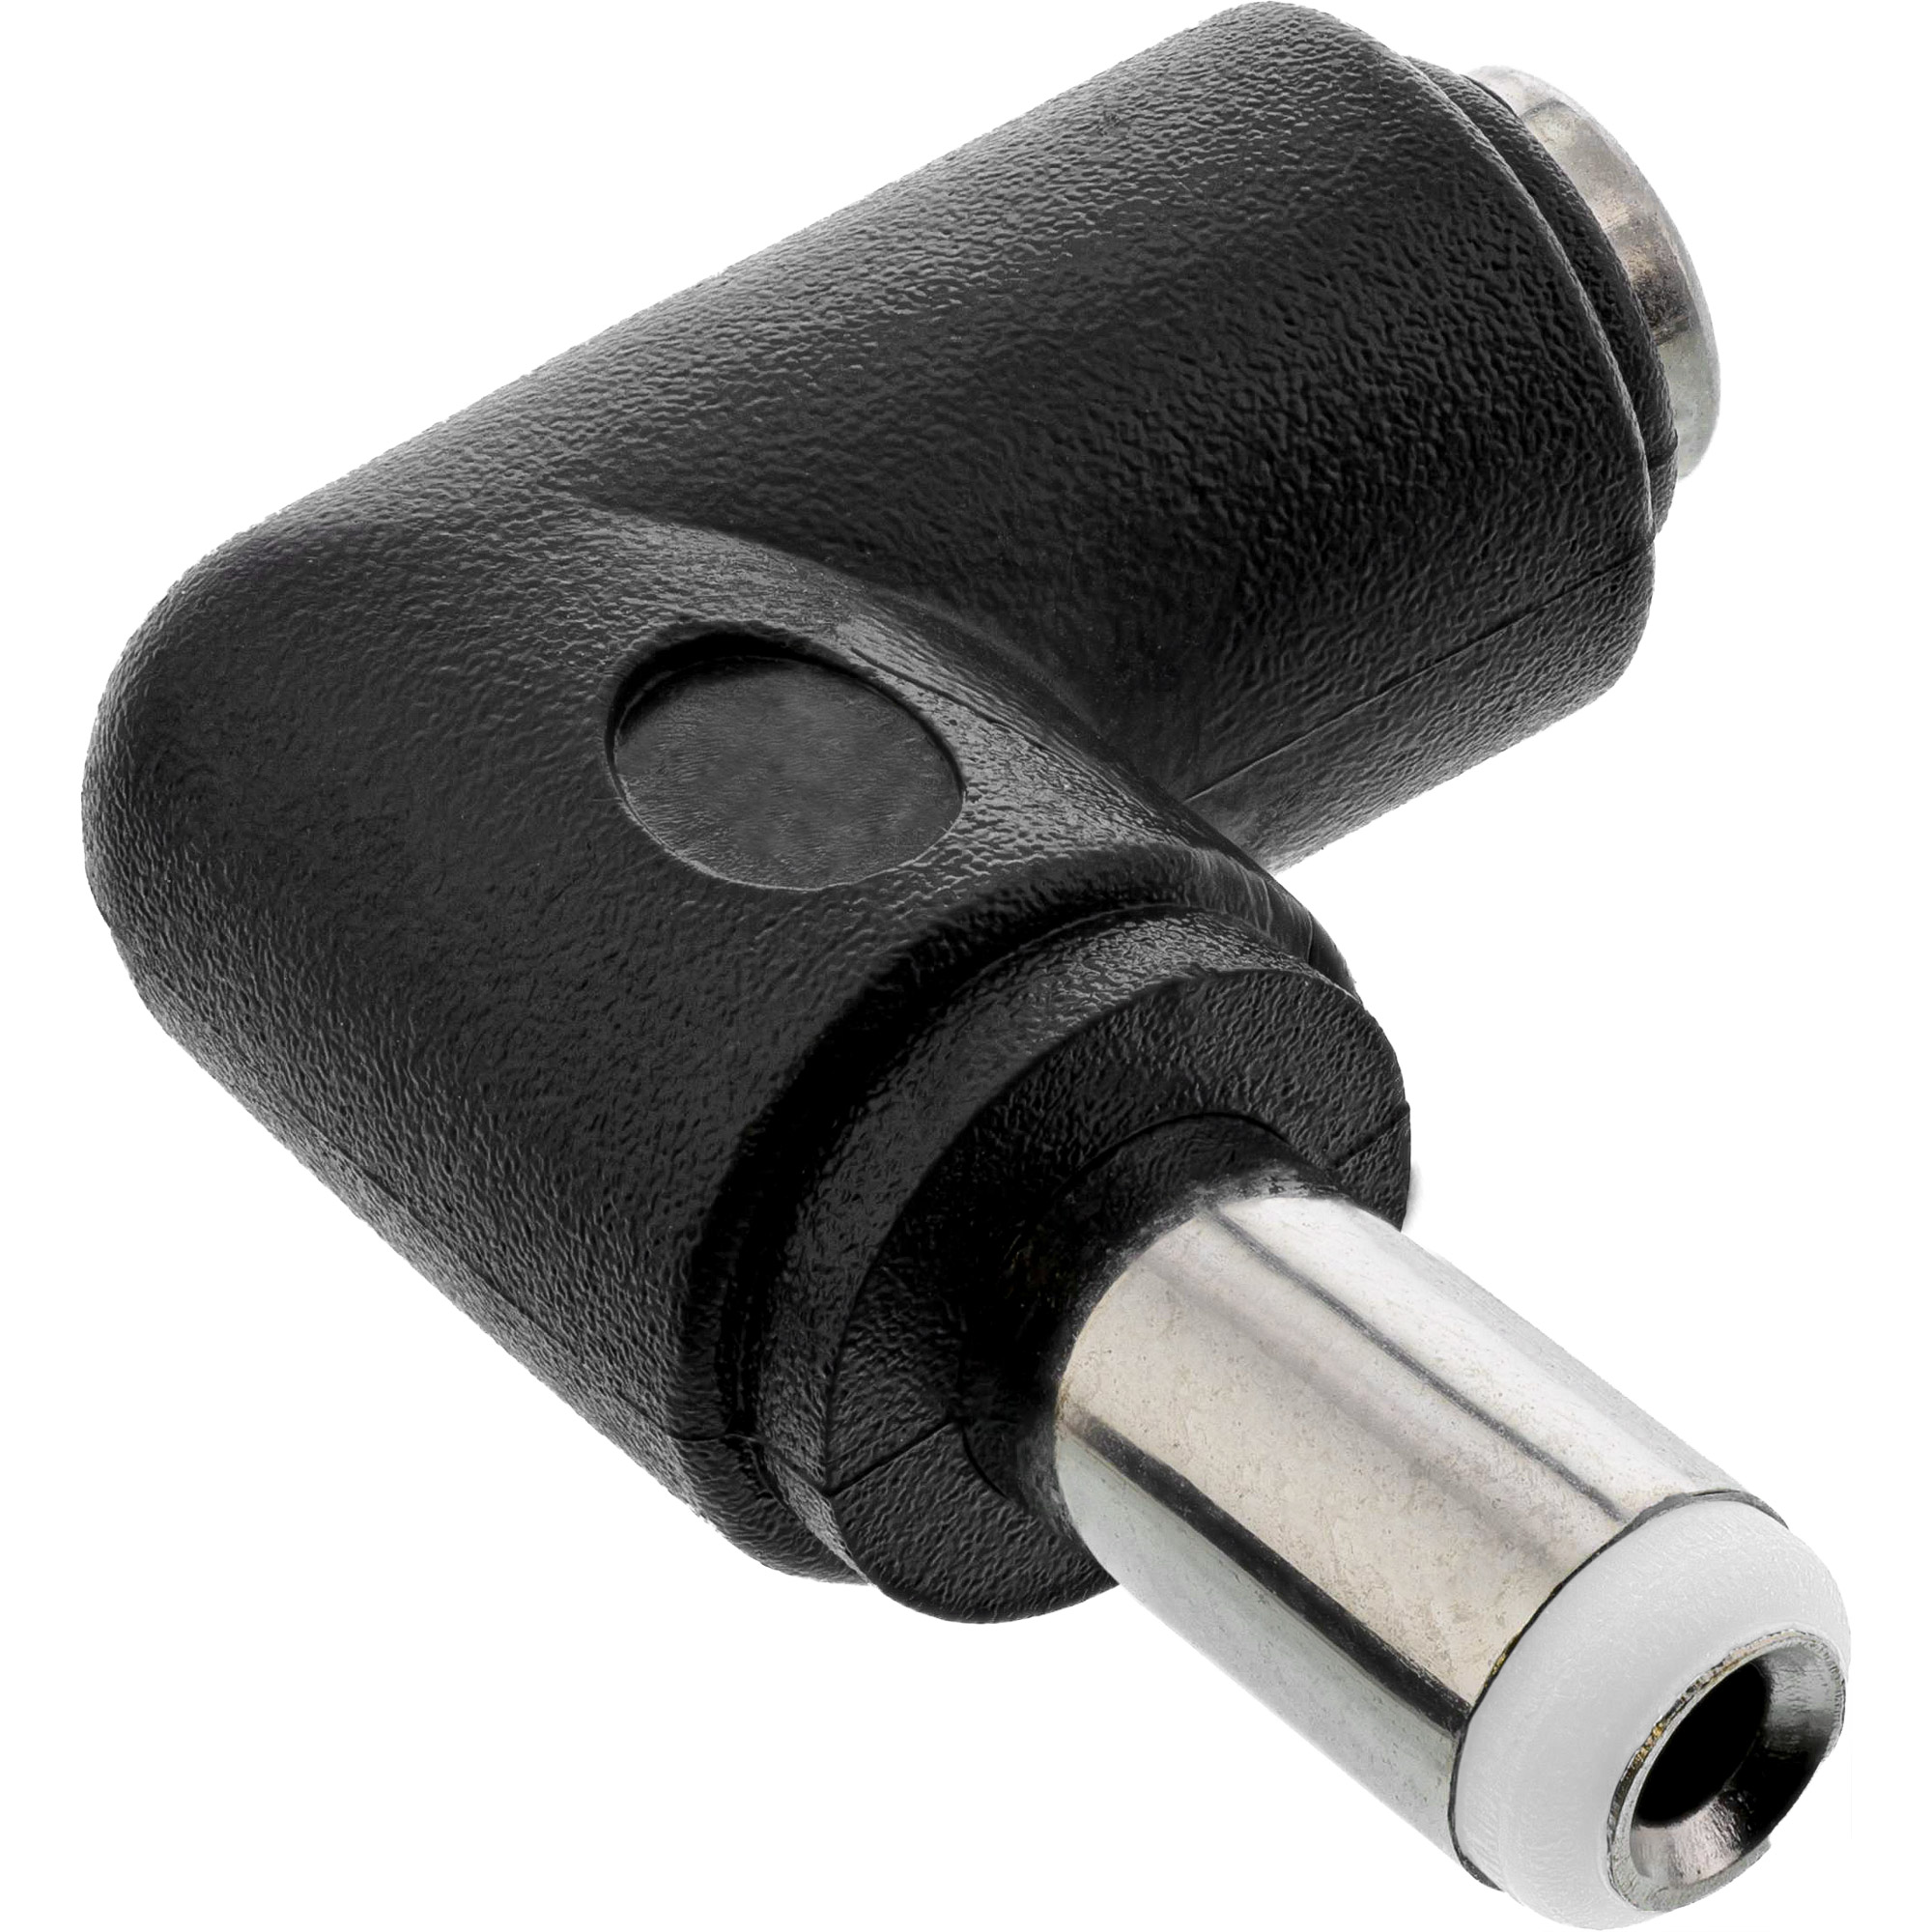 InLine® DC Adapter, 5,5x2,5mm DC Hohlstecker Stecker / Buchse gewinkelt